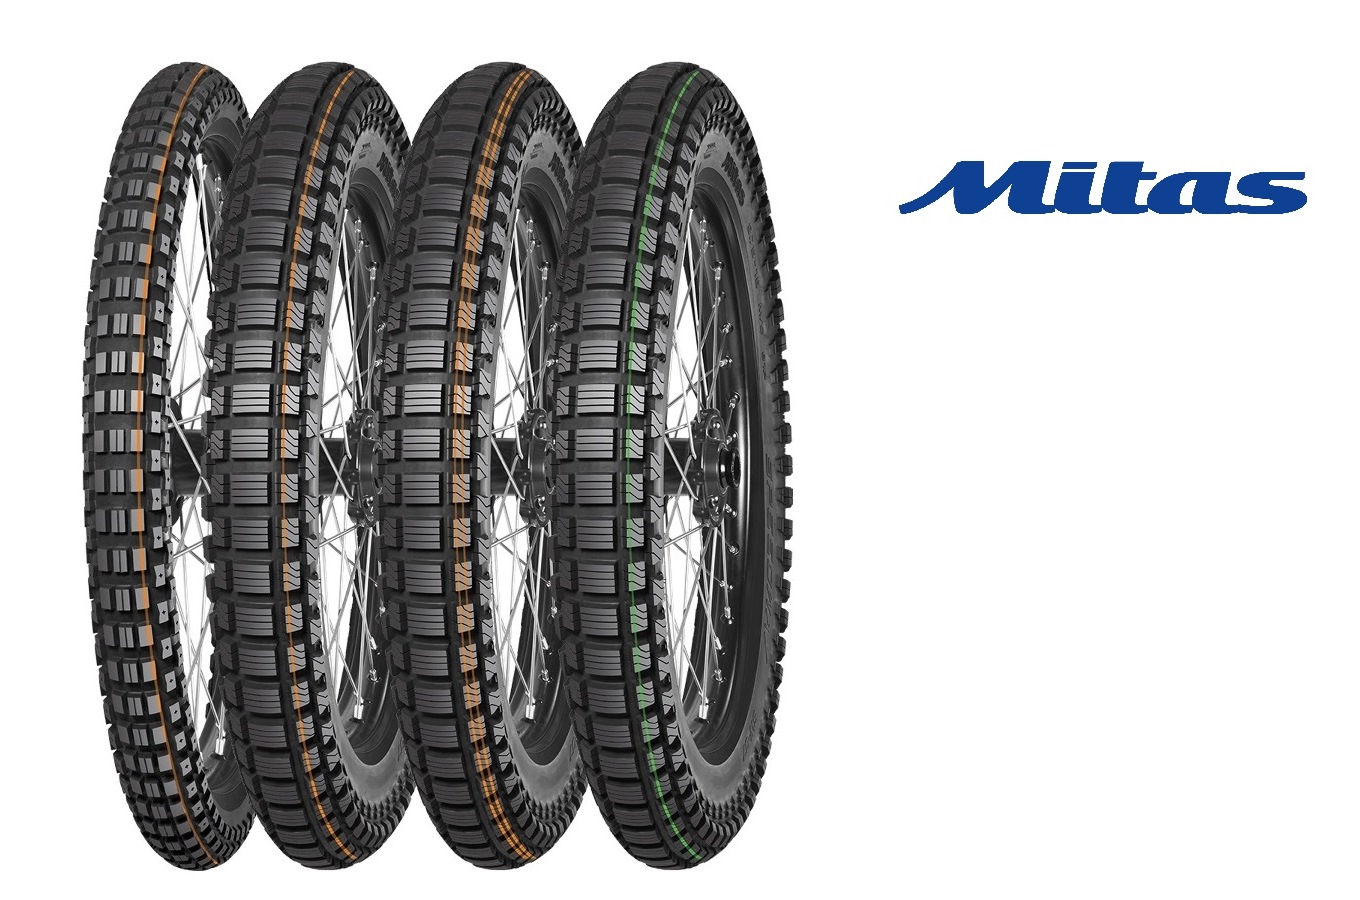 Mitas lança o novo Speedway, um pneu exclusivo para off-road thumbnail